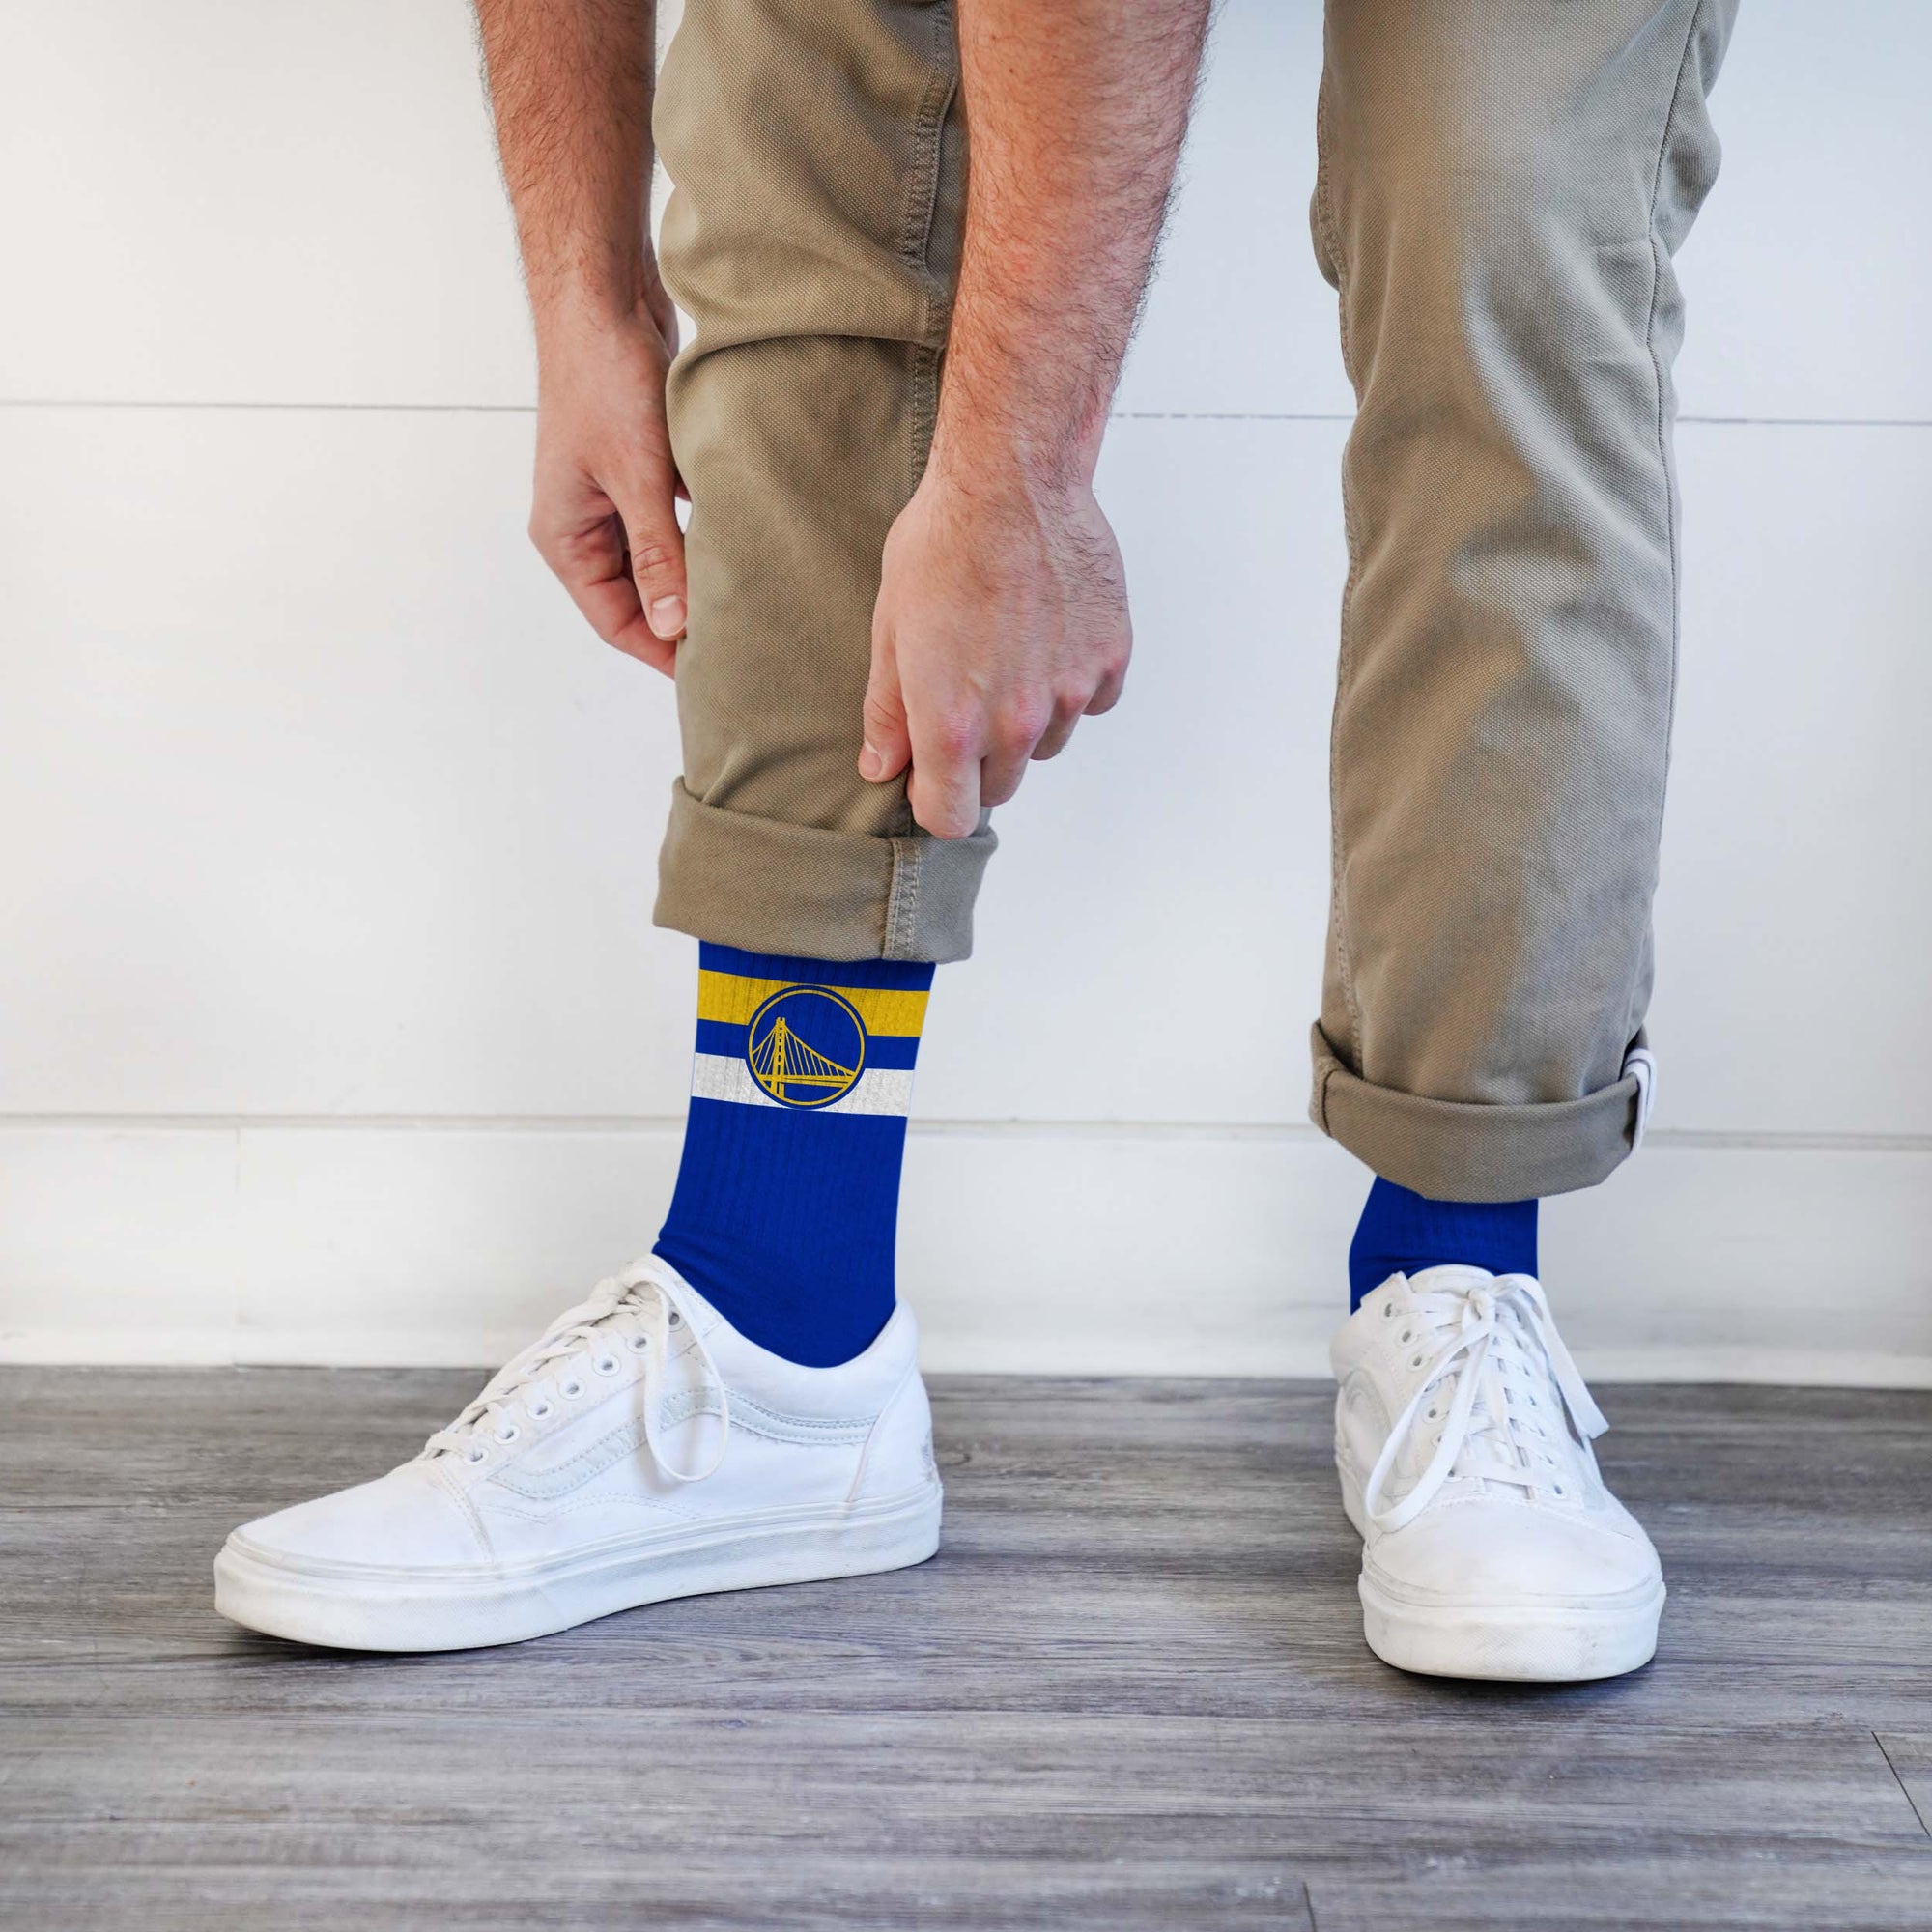 Golden State Warriors Legend Premium Crew Socks